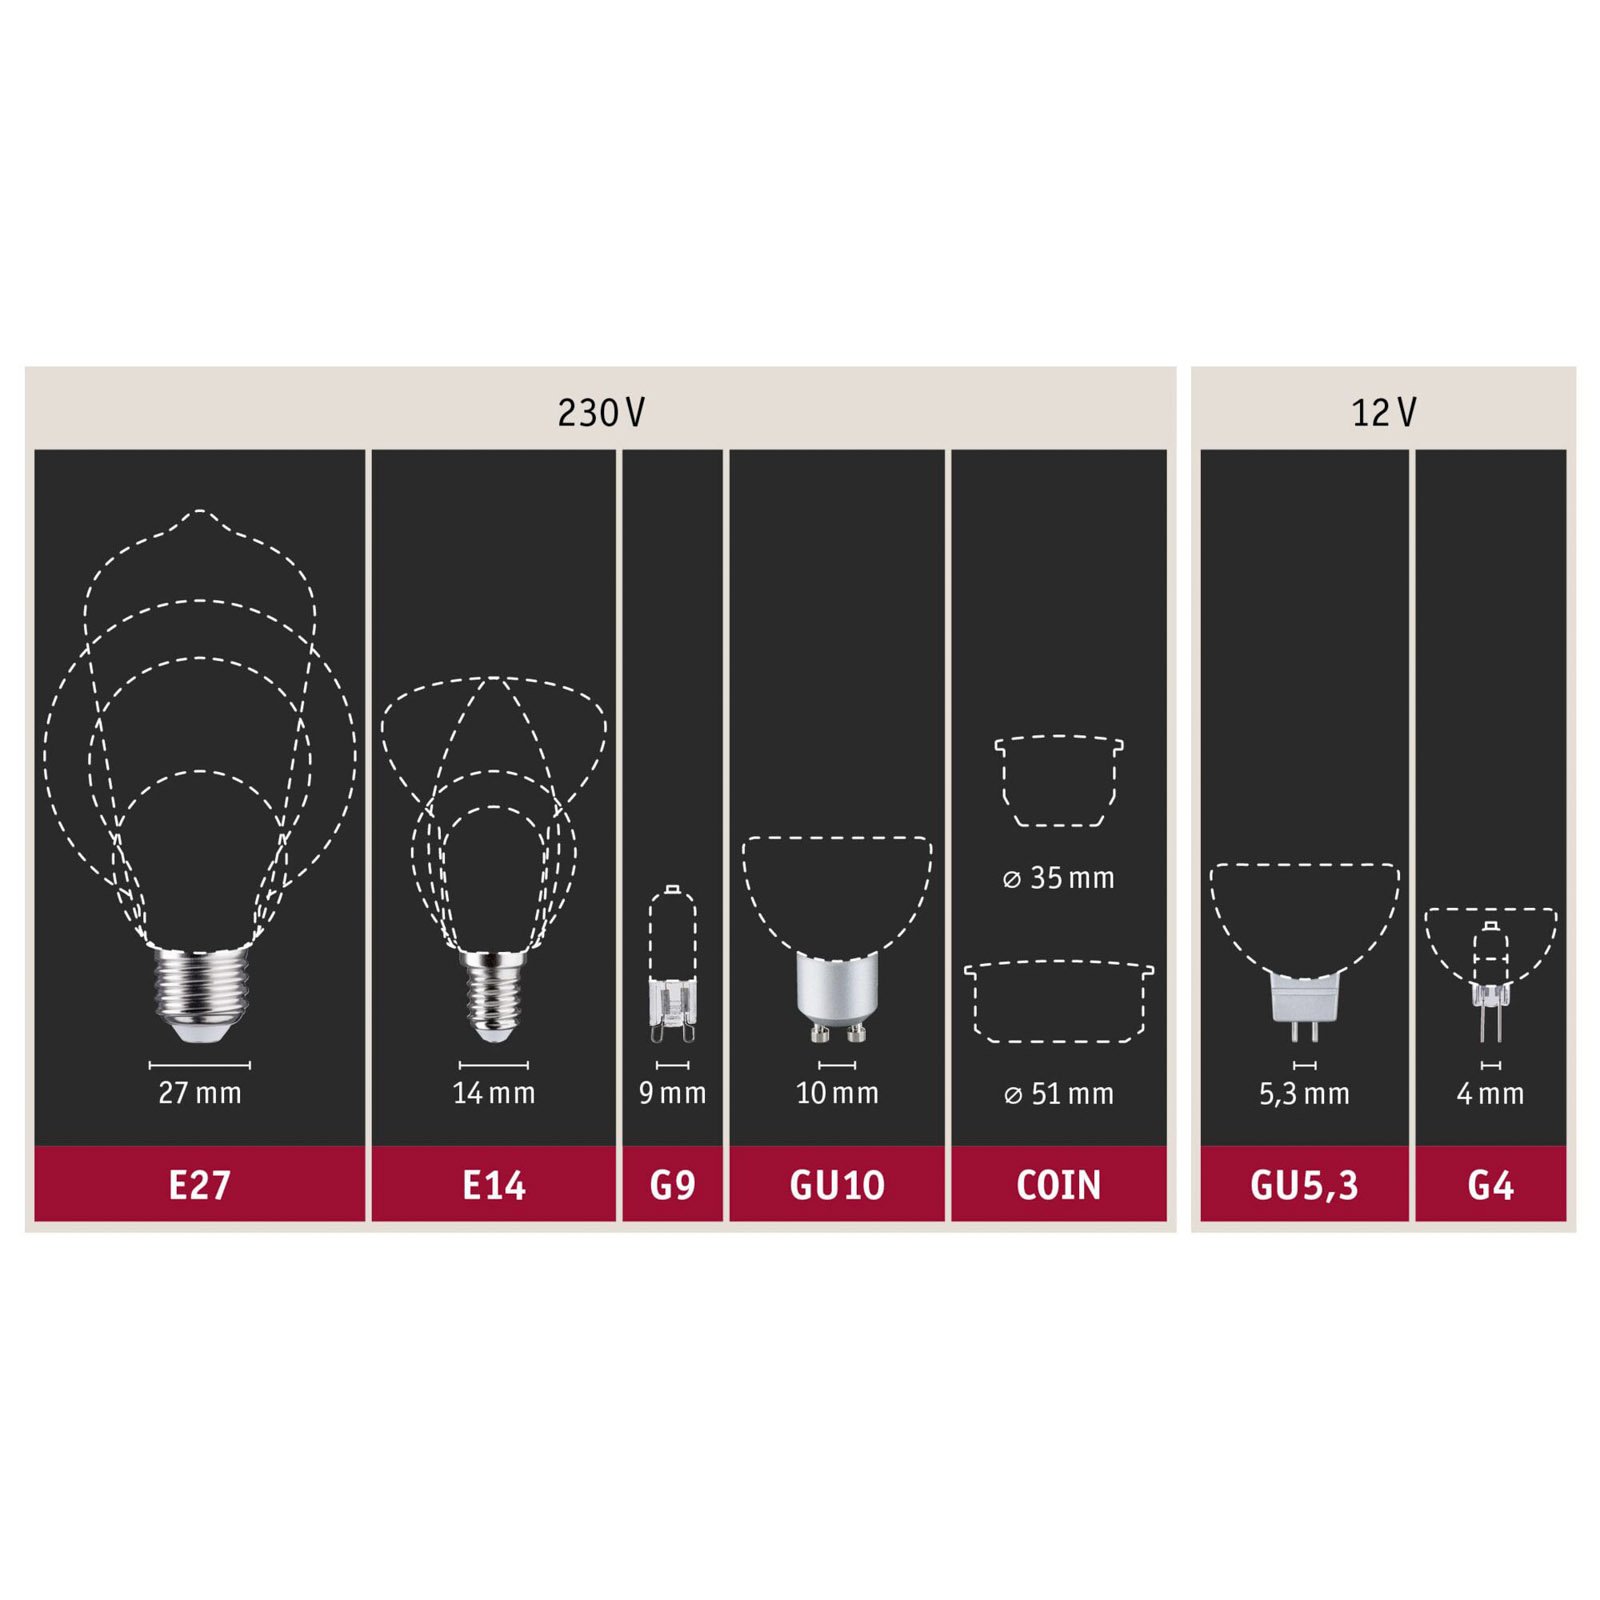 LED lamp E27 5W filament 2.700K helder dimbaar